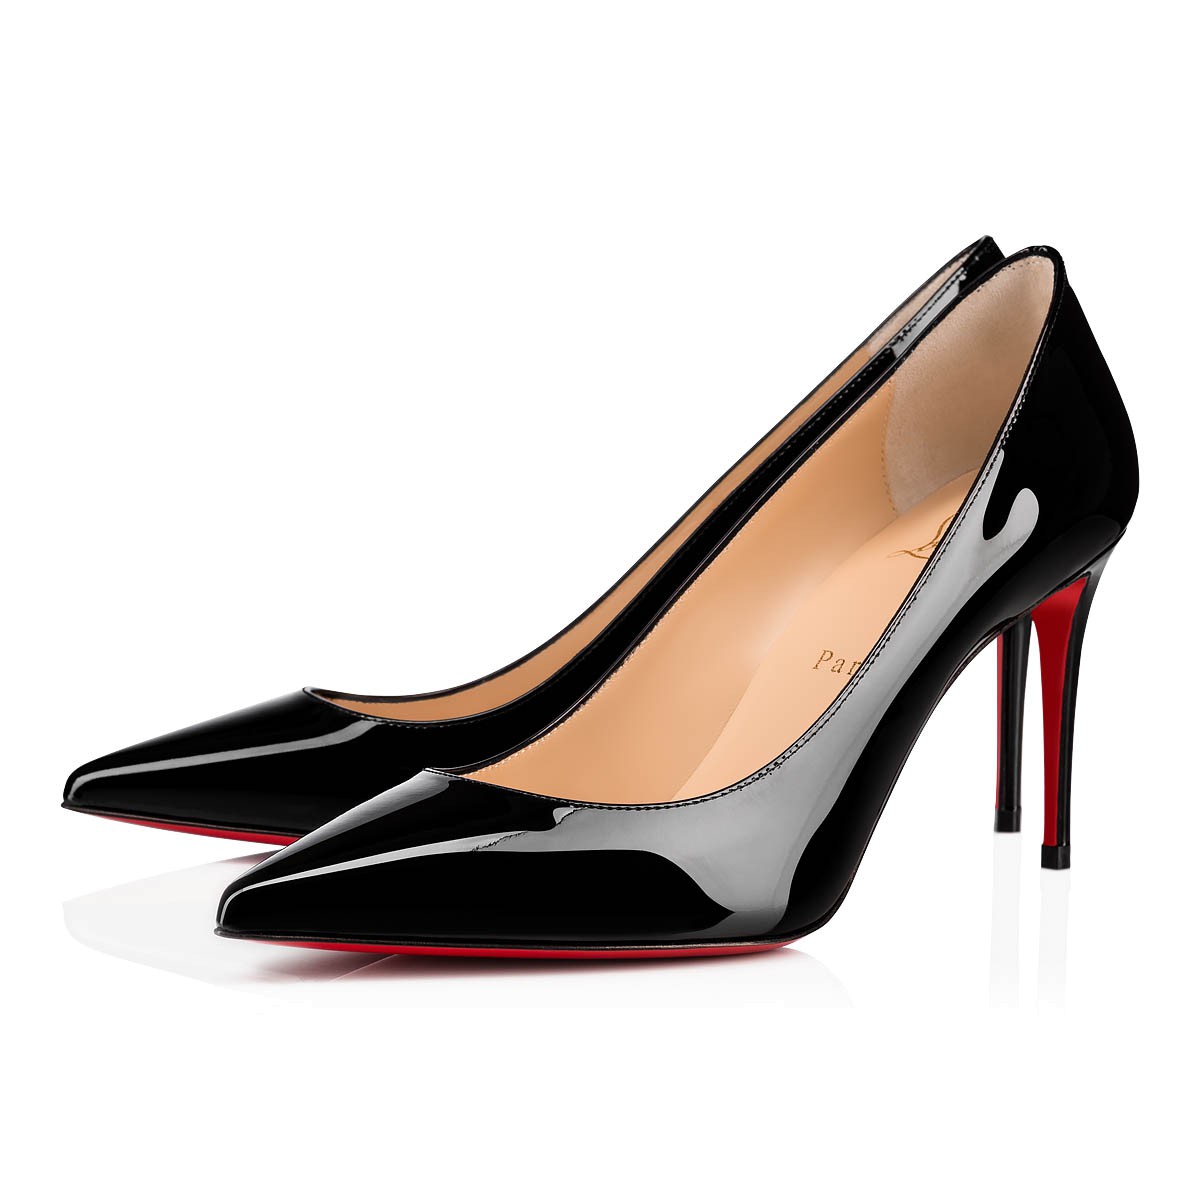 Kate 85 Black Patent calf leather - Women Shoes - Christian Louboutin